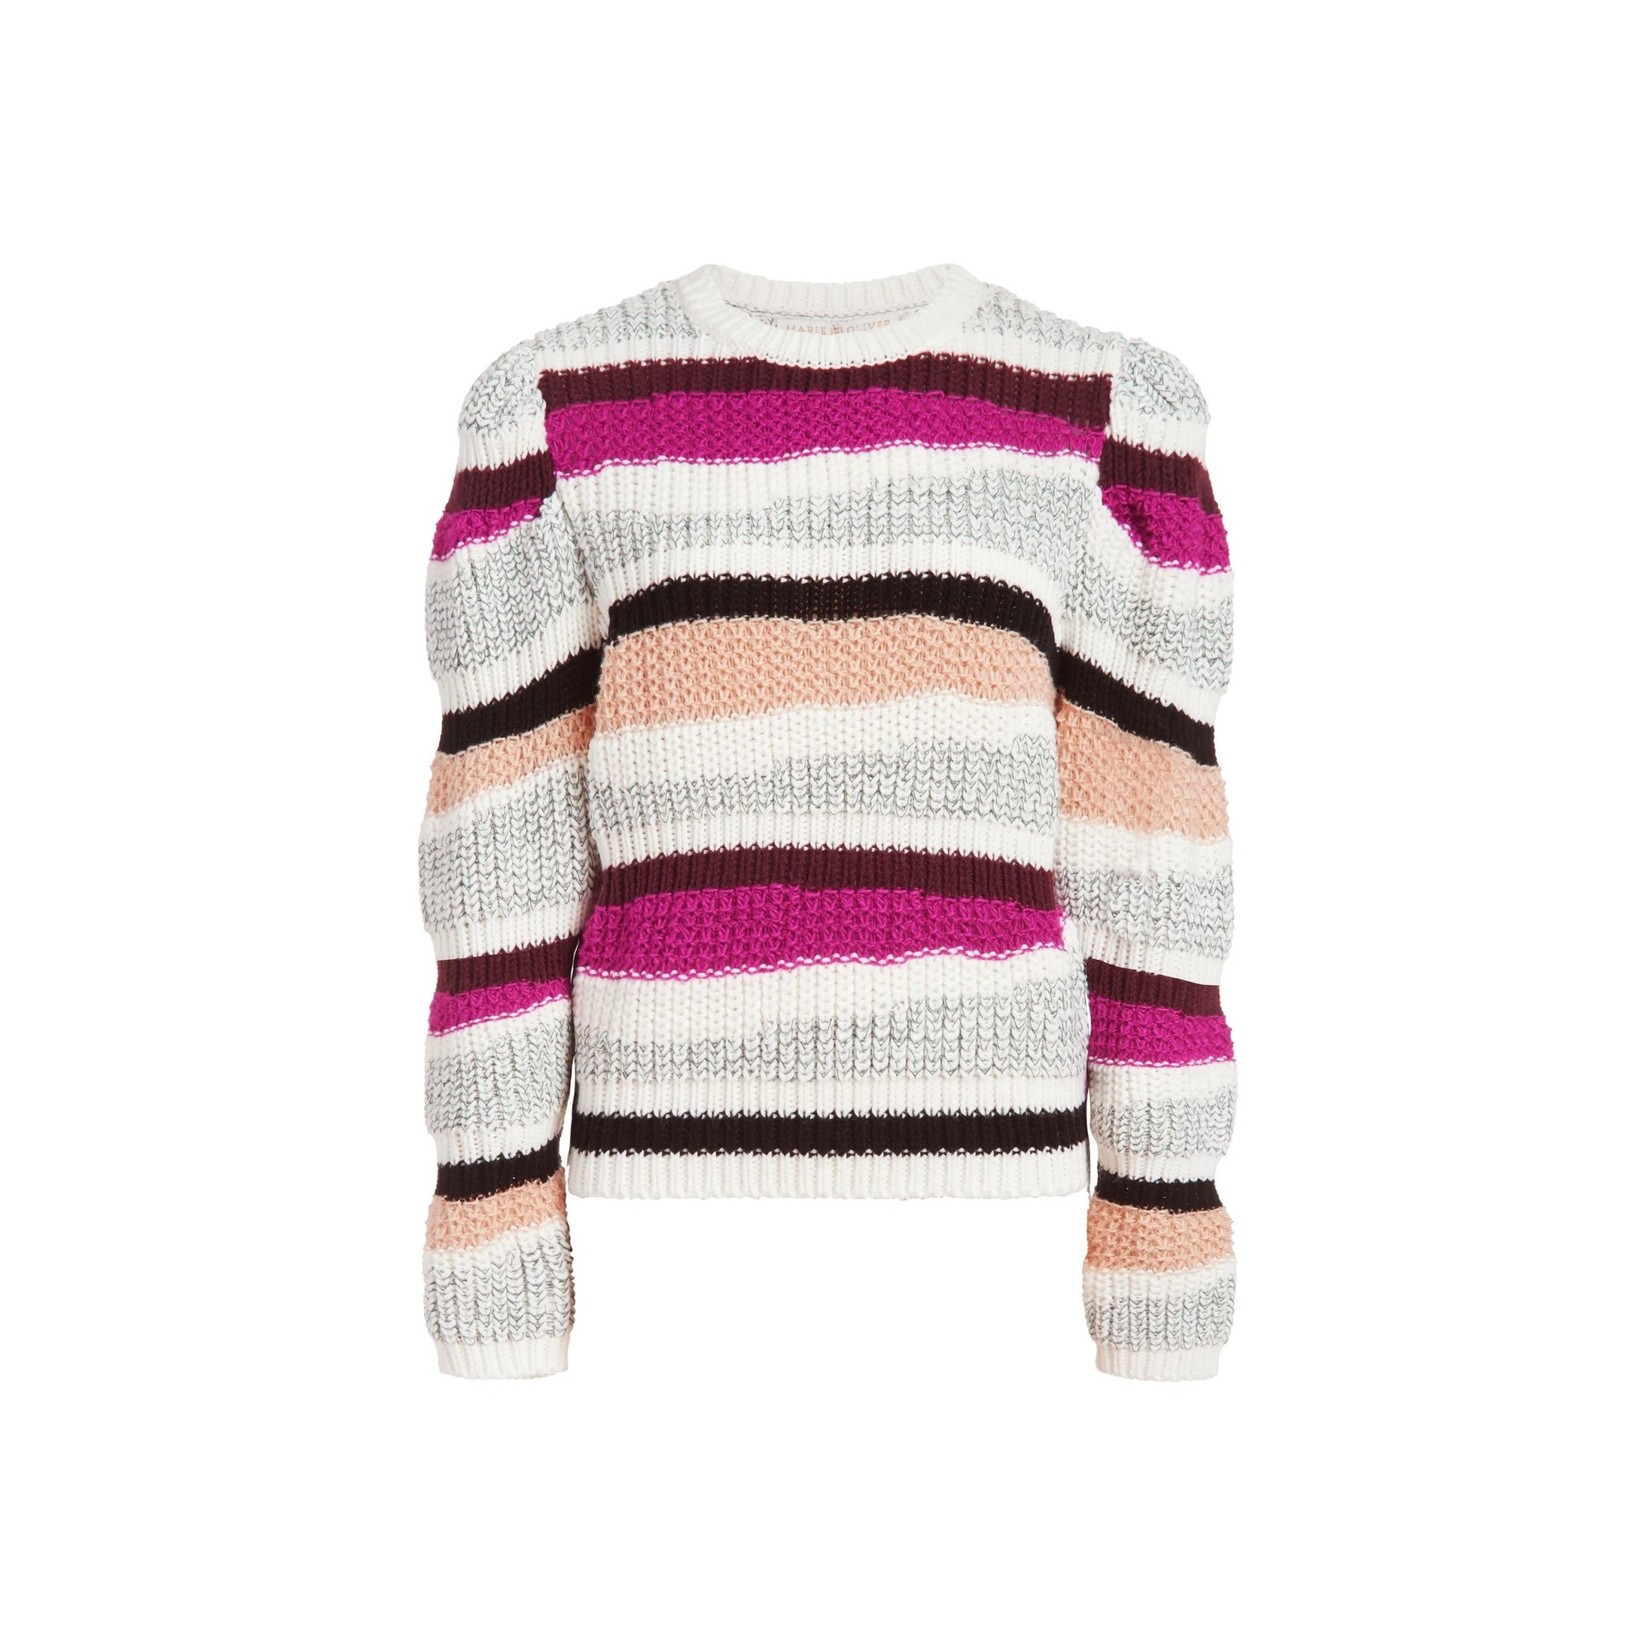 Marie Oliver Aspen Sweater